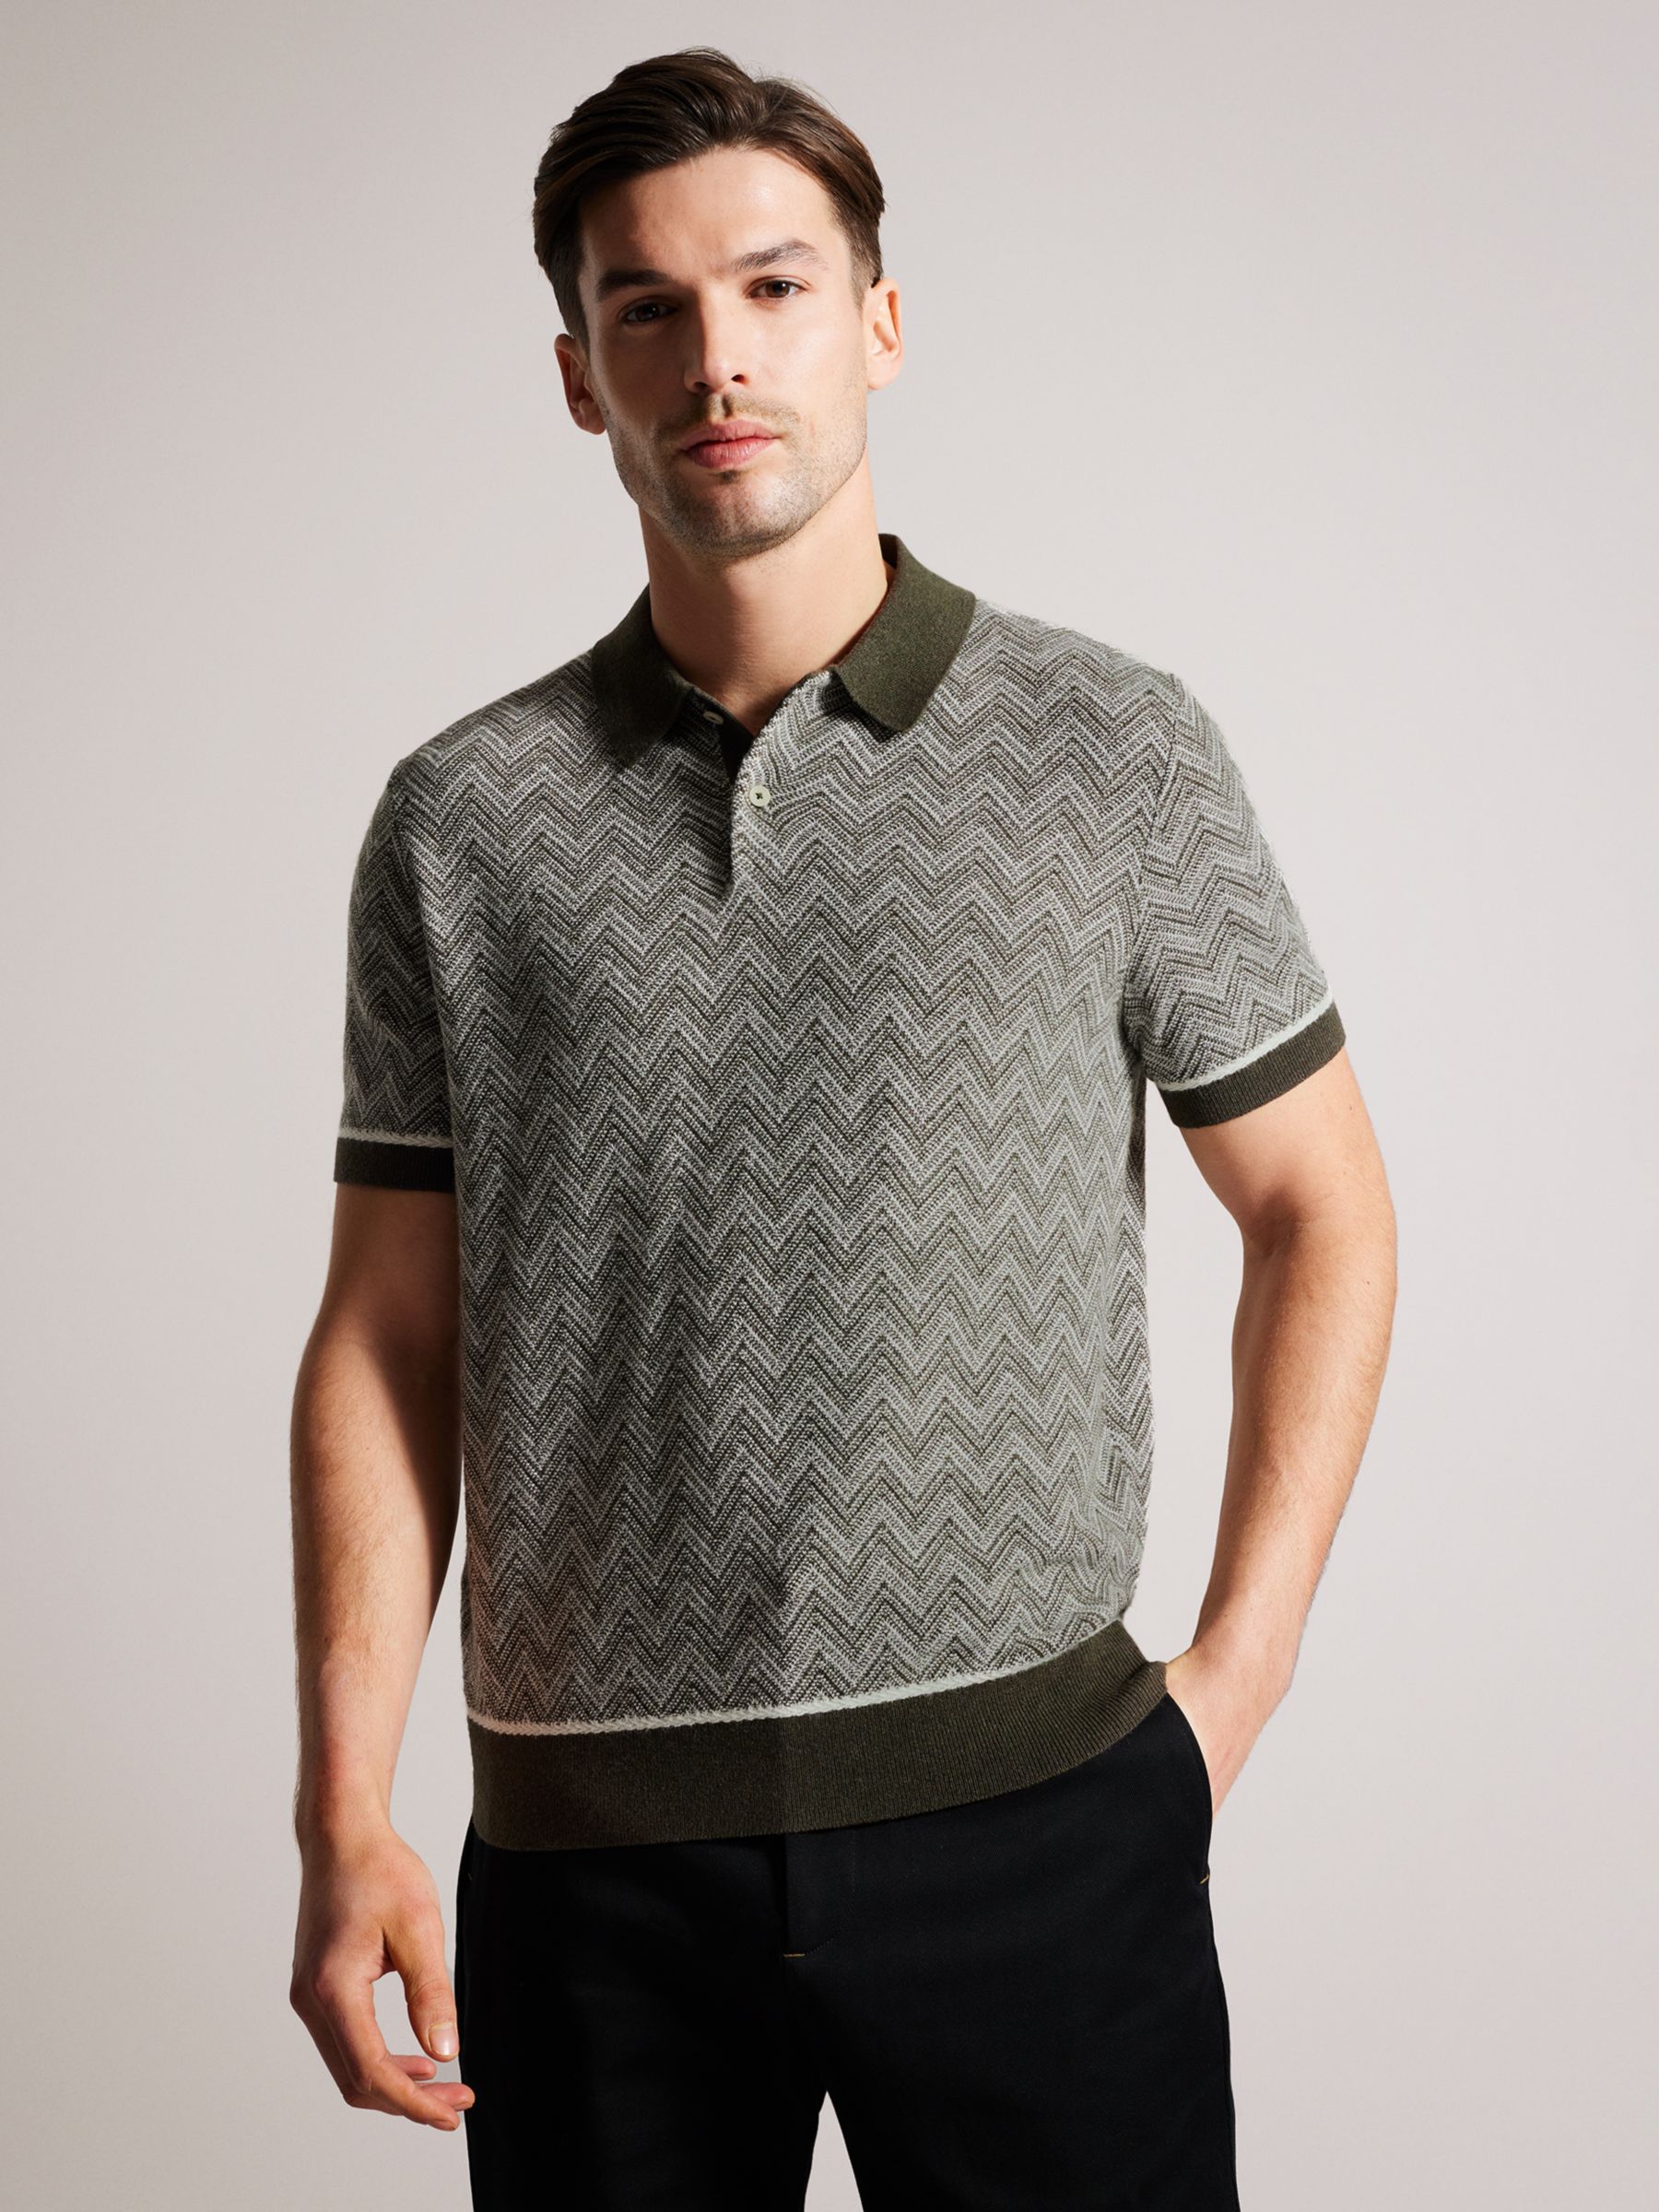 Ted Baker Waldun Knitted Polo Shirt, Dark Green at John Lewis & Partners